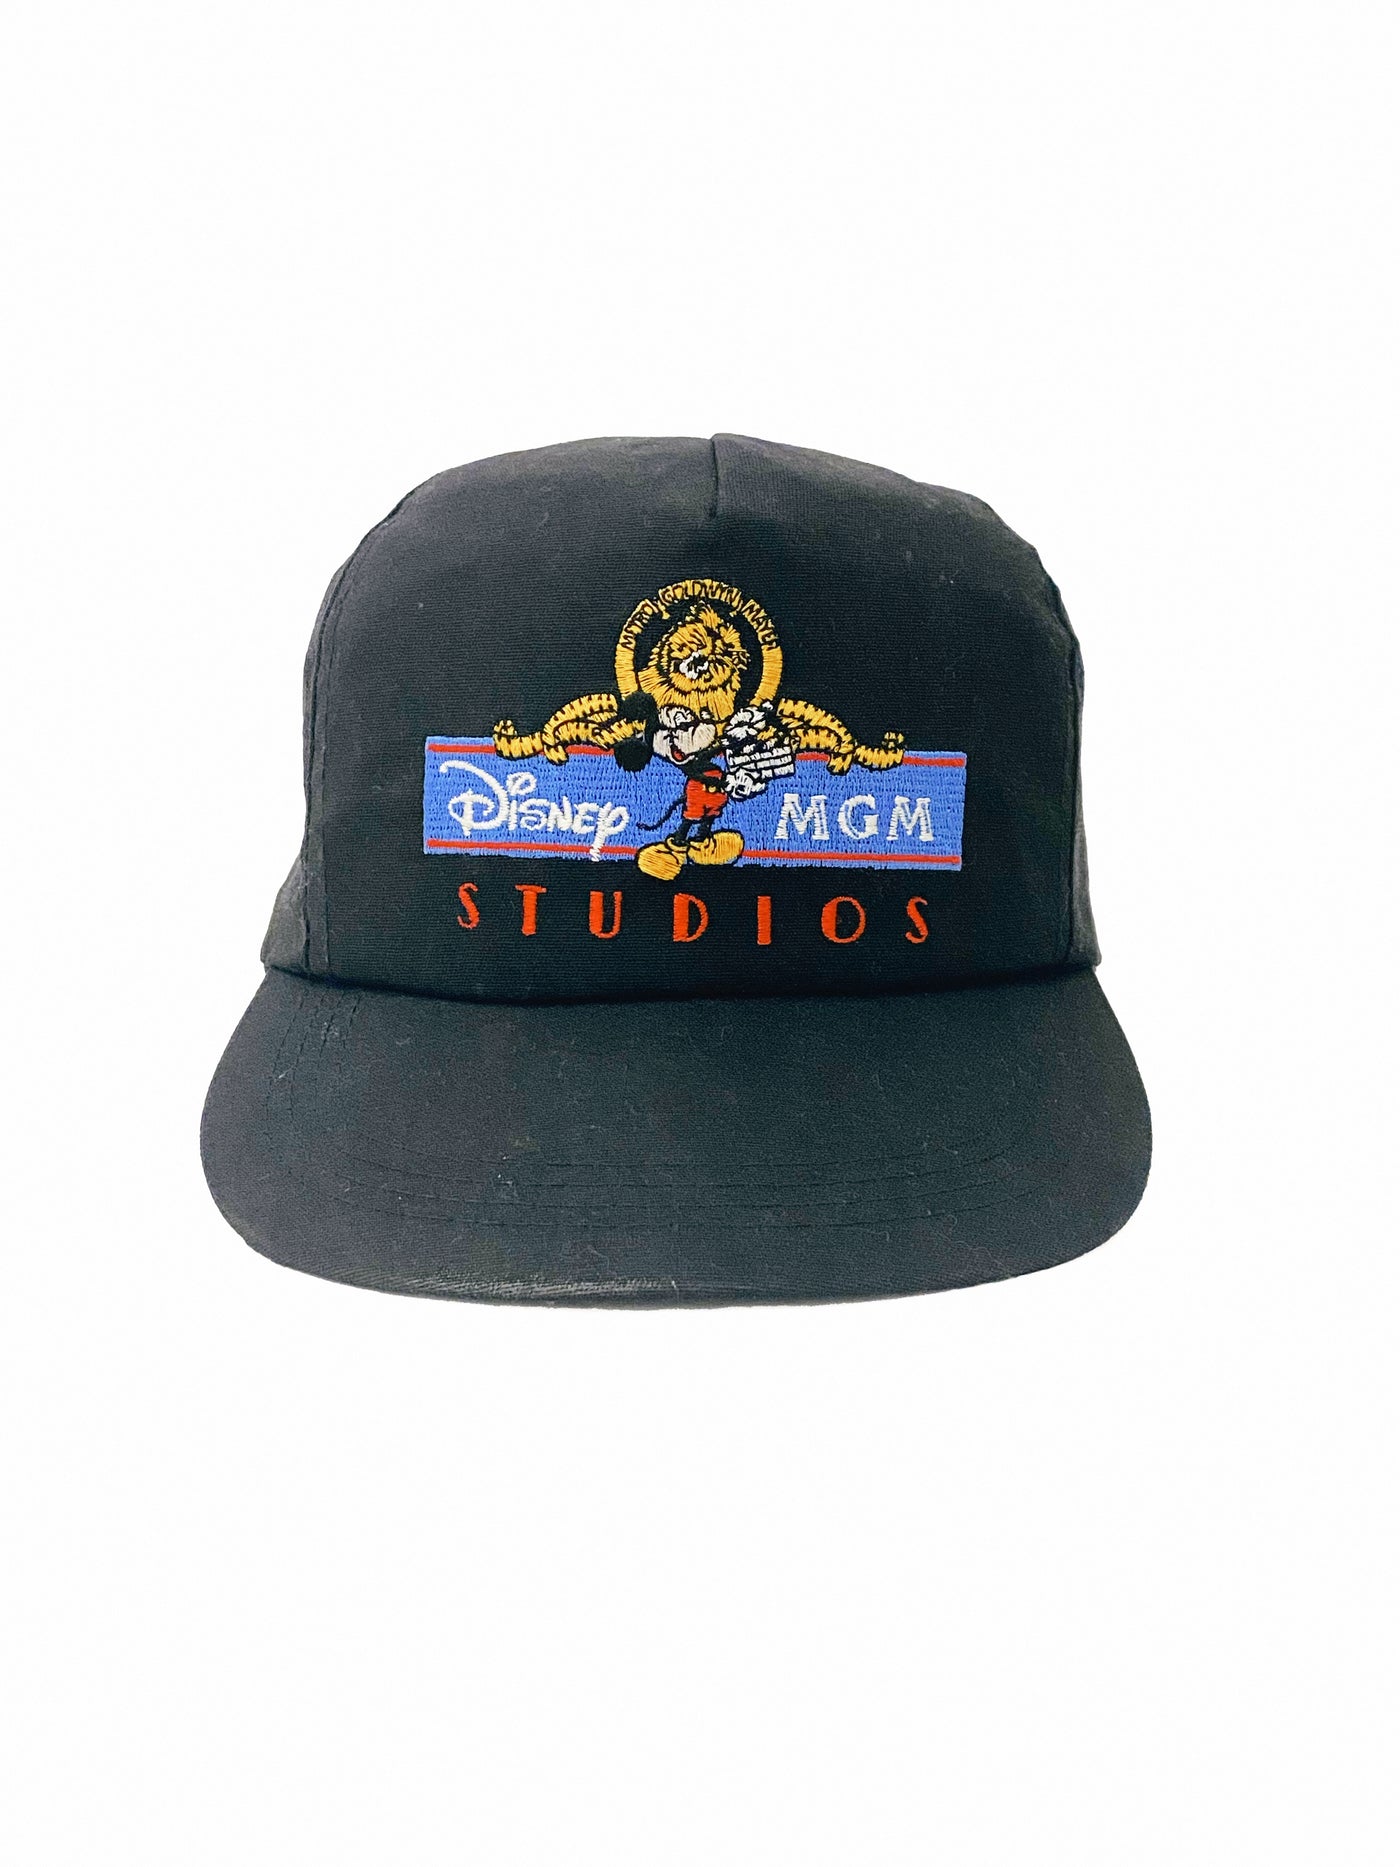 Vintage 1987 Disney MGM Studios Snapback